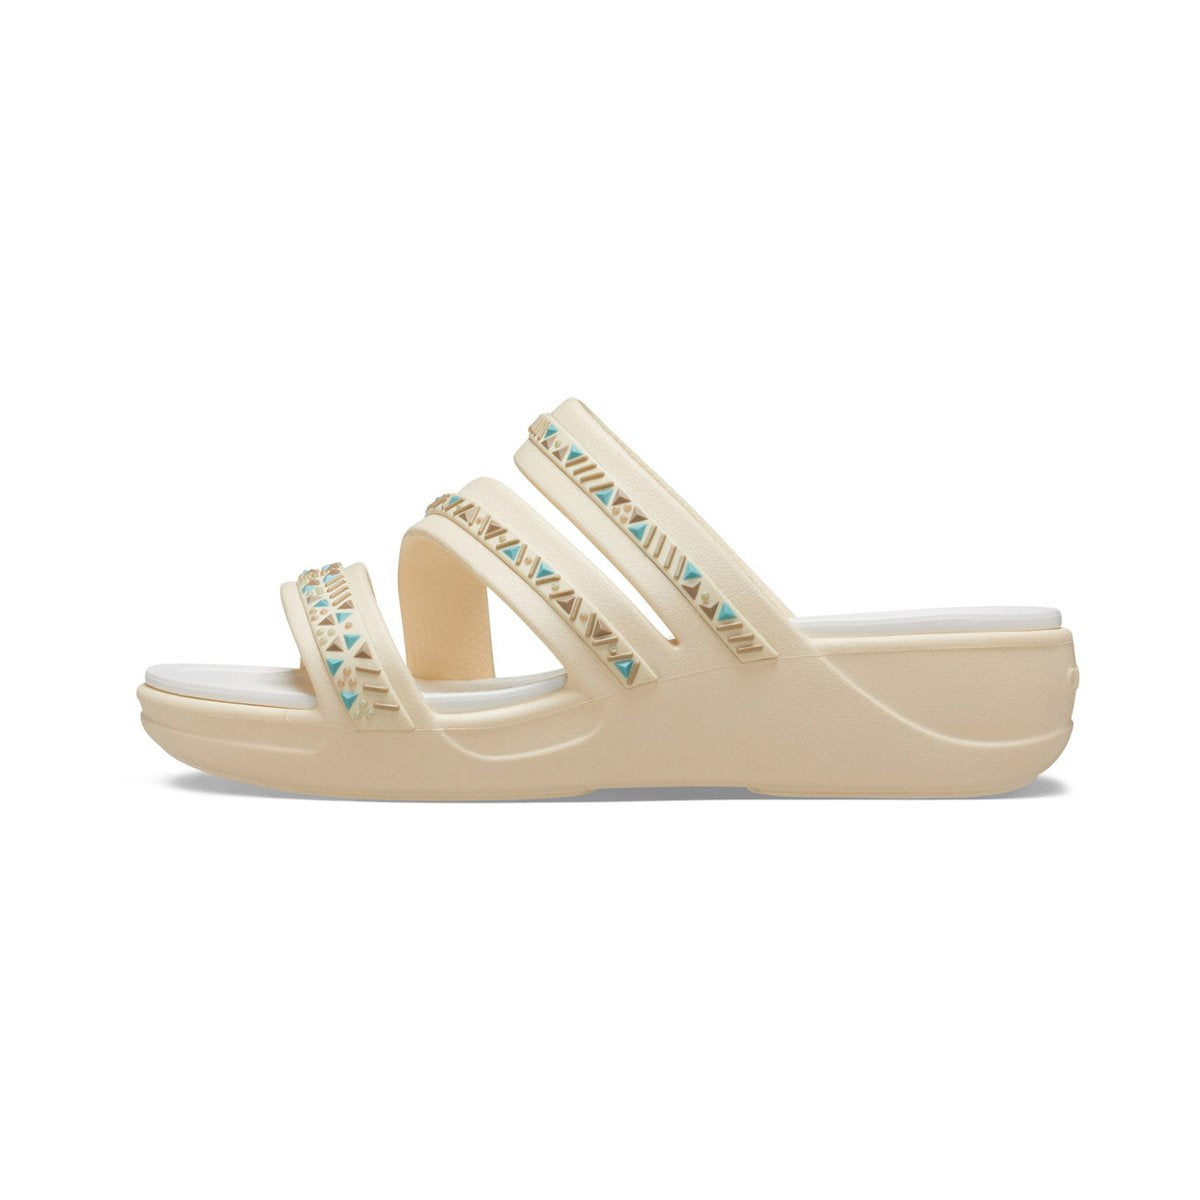 Crocs sandalo da donna Boca Medallion Strappy Wedge W207431-108 vanilla